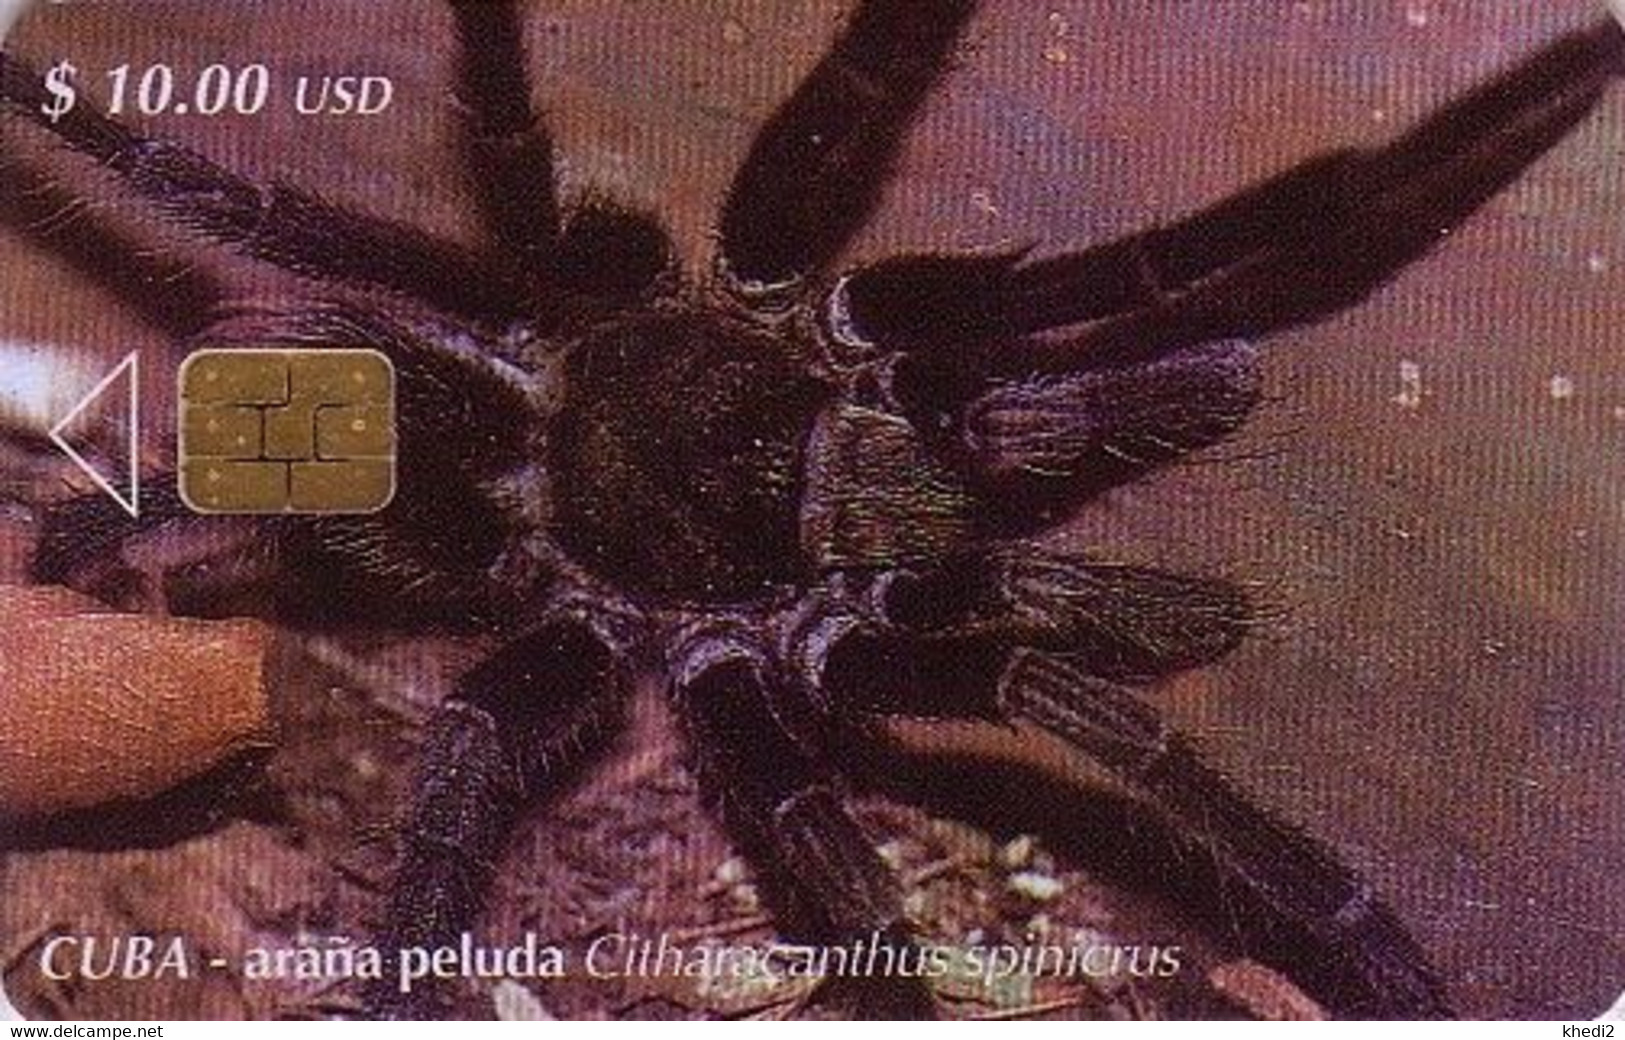 Télécarte à Puce Cuba - ANIMAL - ARAIGNEE - SPIDER Chip Phonecard - SPINNE Telefonkarte - 17 - Cuba